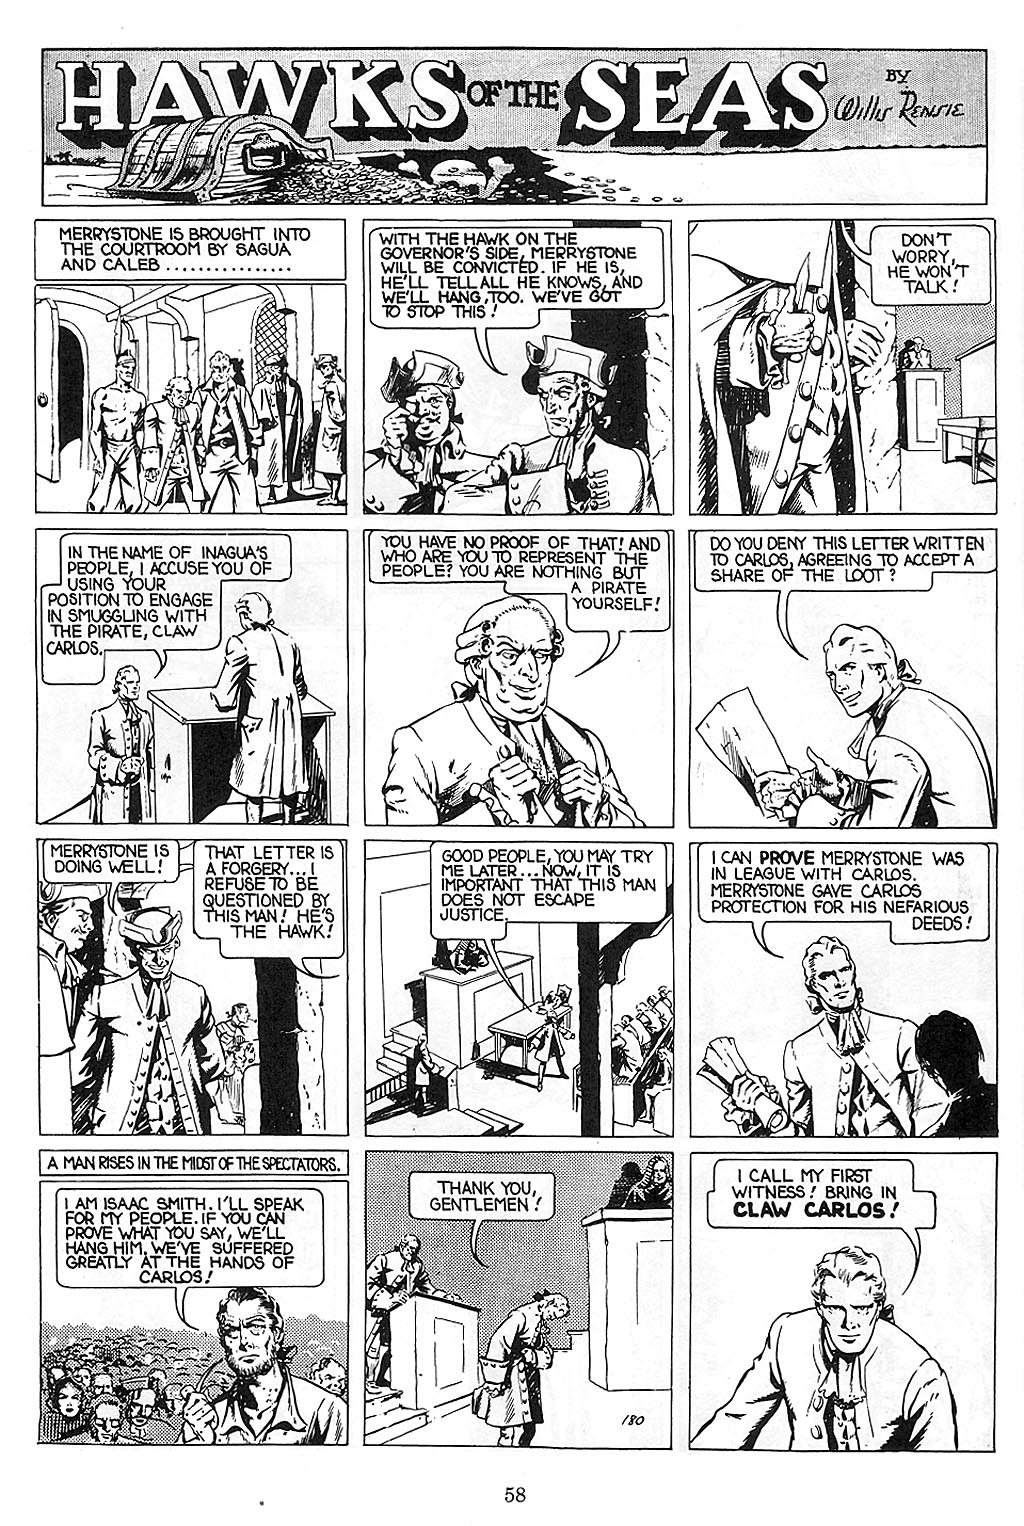 Read online Will Eisner's Hawks of the Seas comic -  Issue # TPB - 59